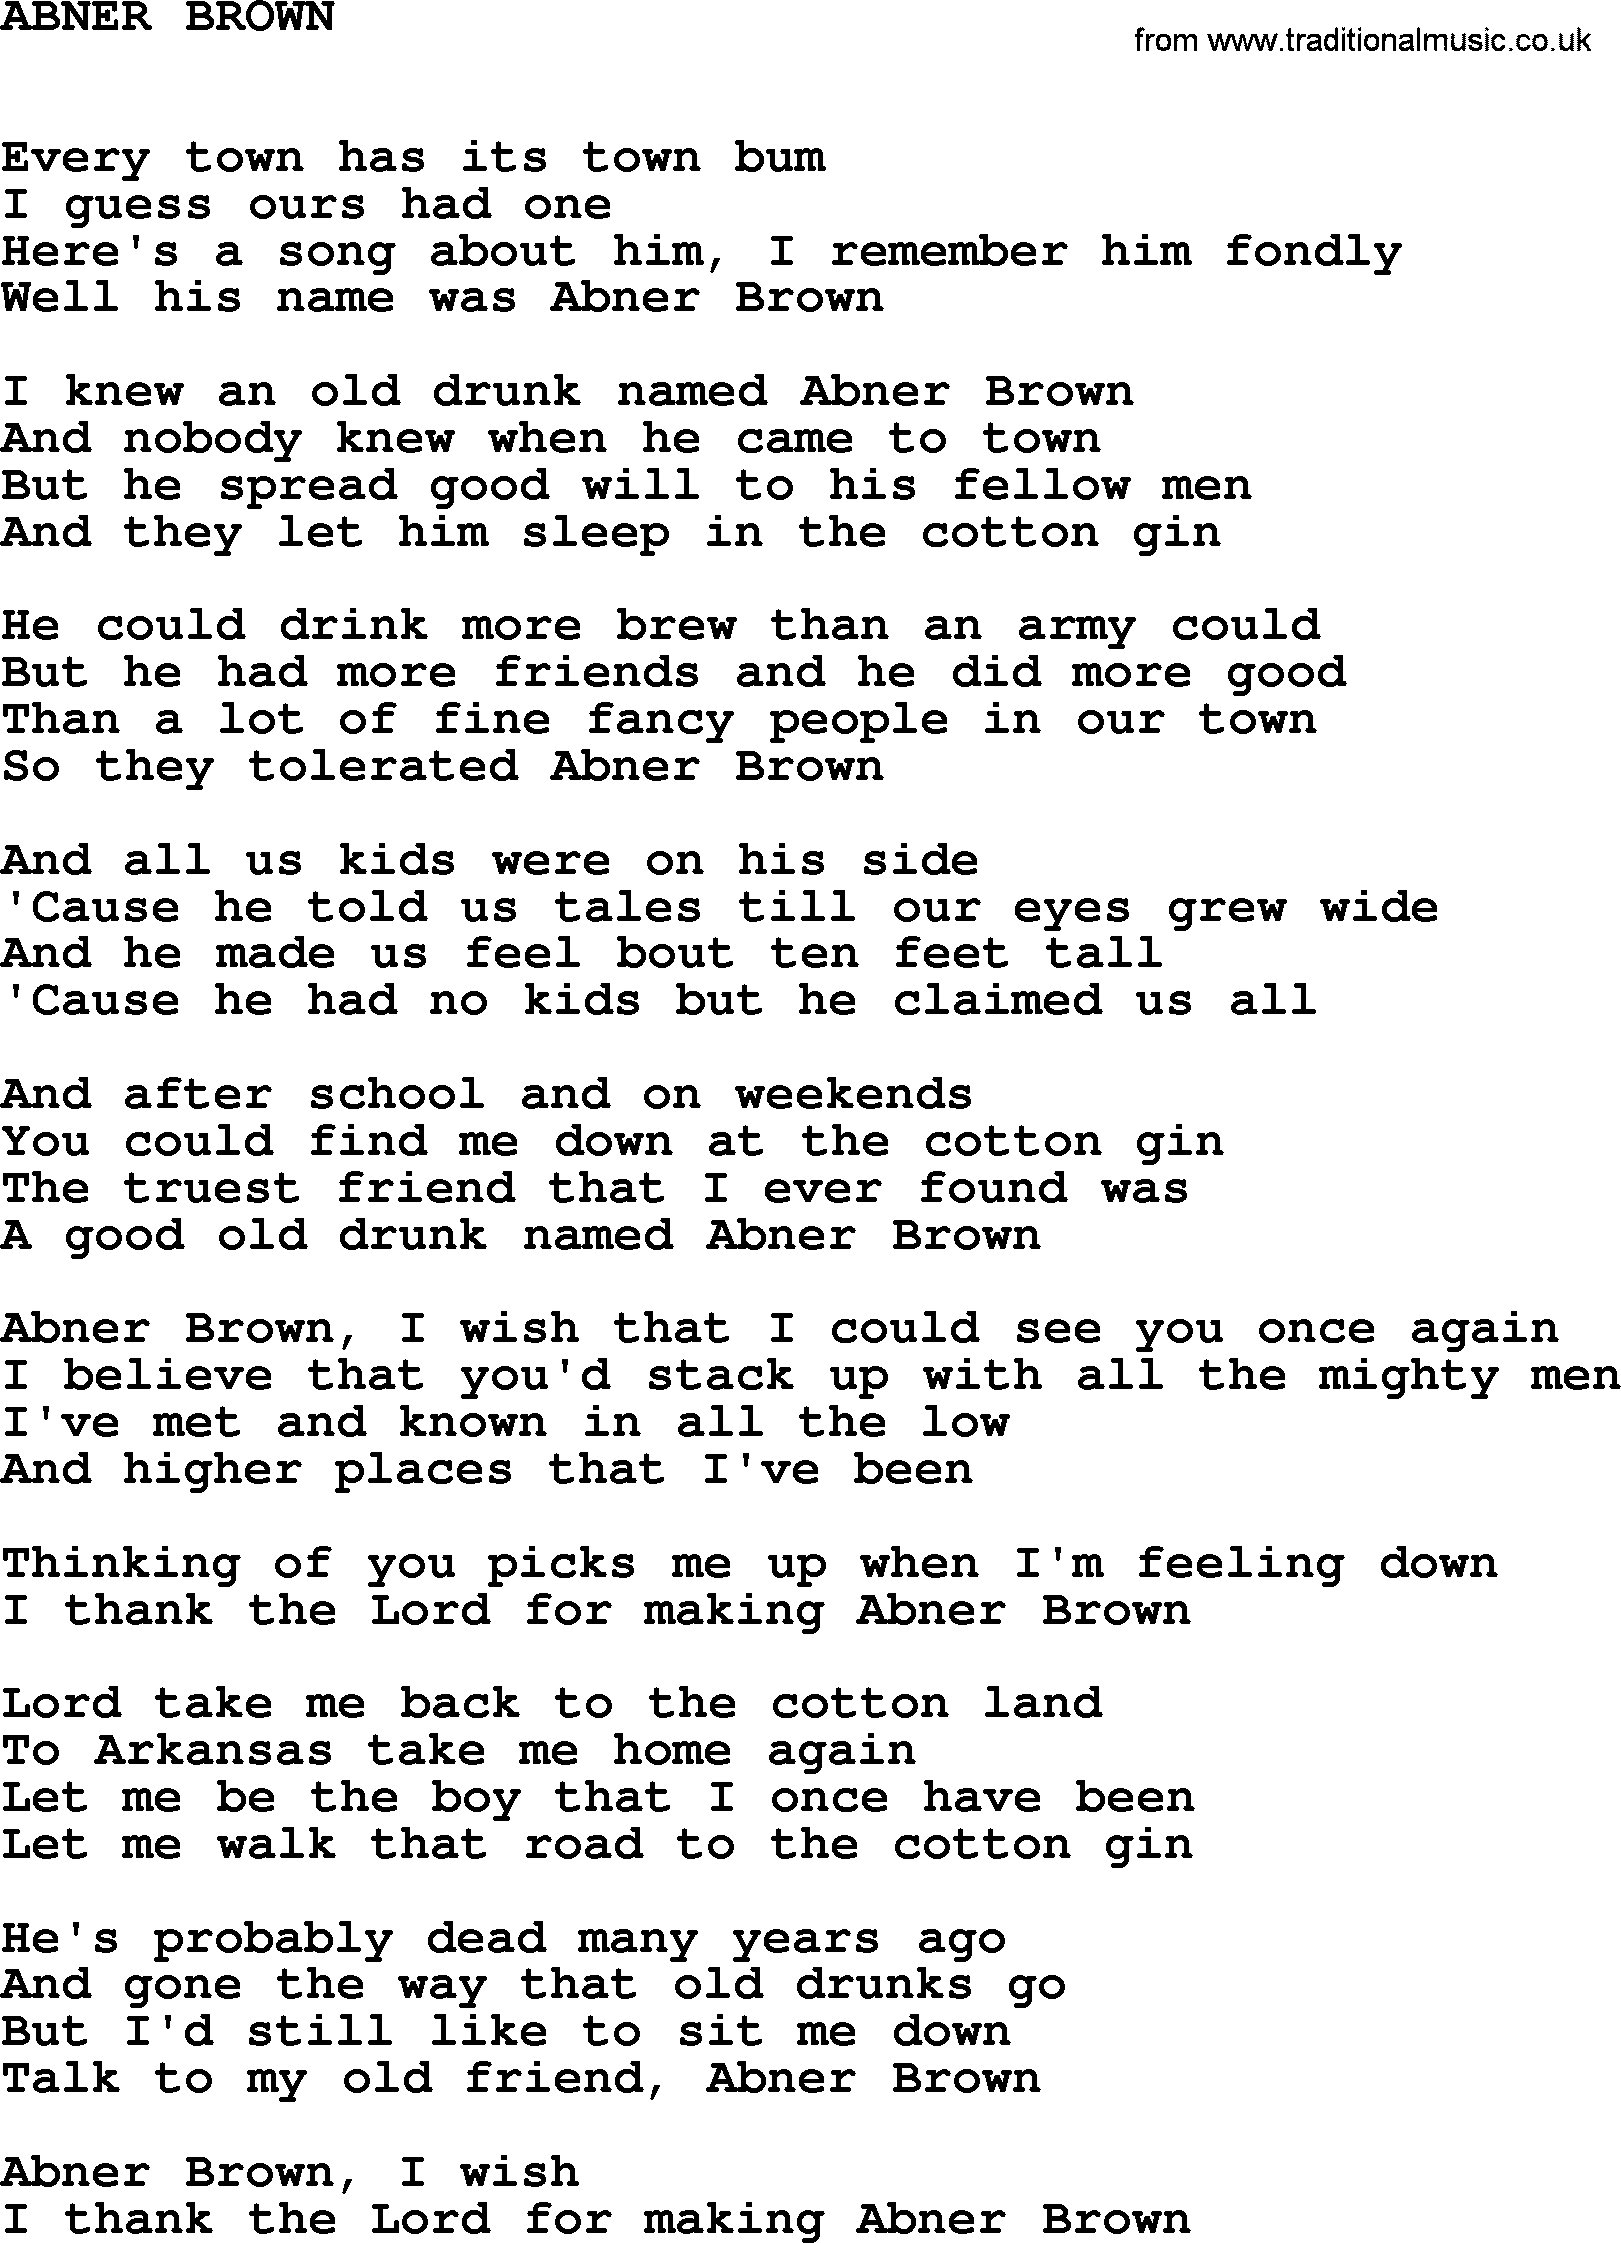 Johnny Cash song Abner Brown.txt lyrics